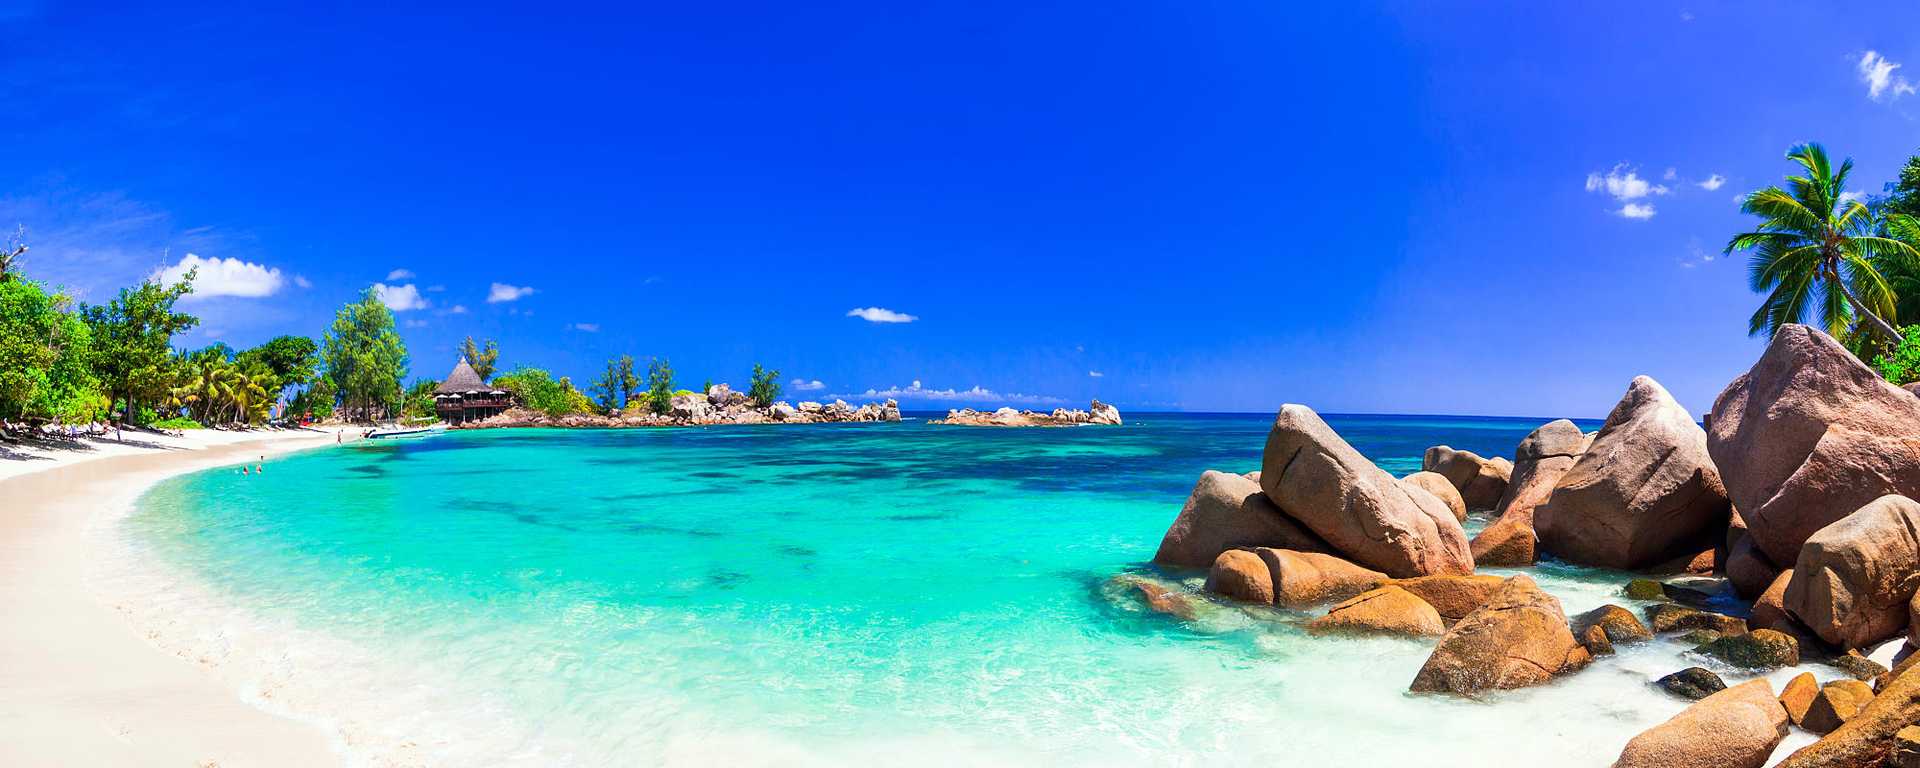 Praslin Island in the Seychelles